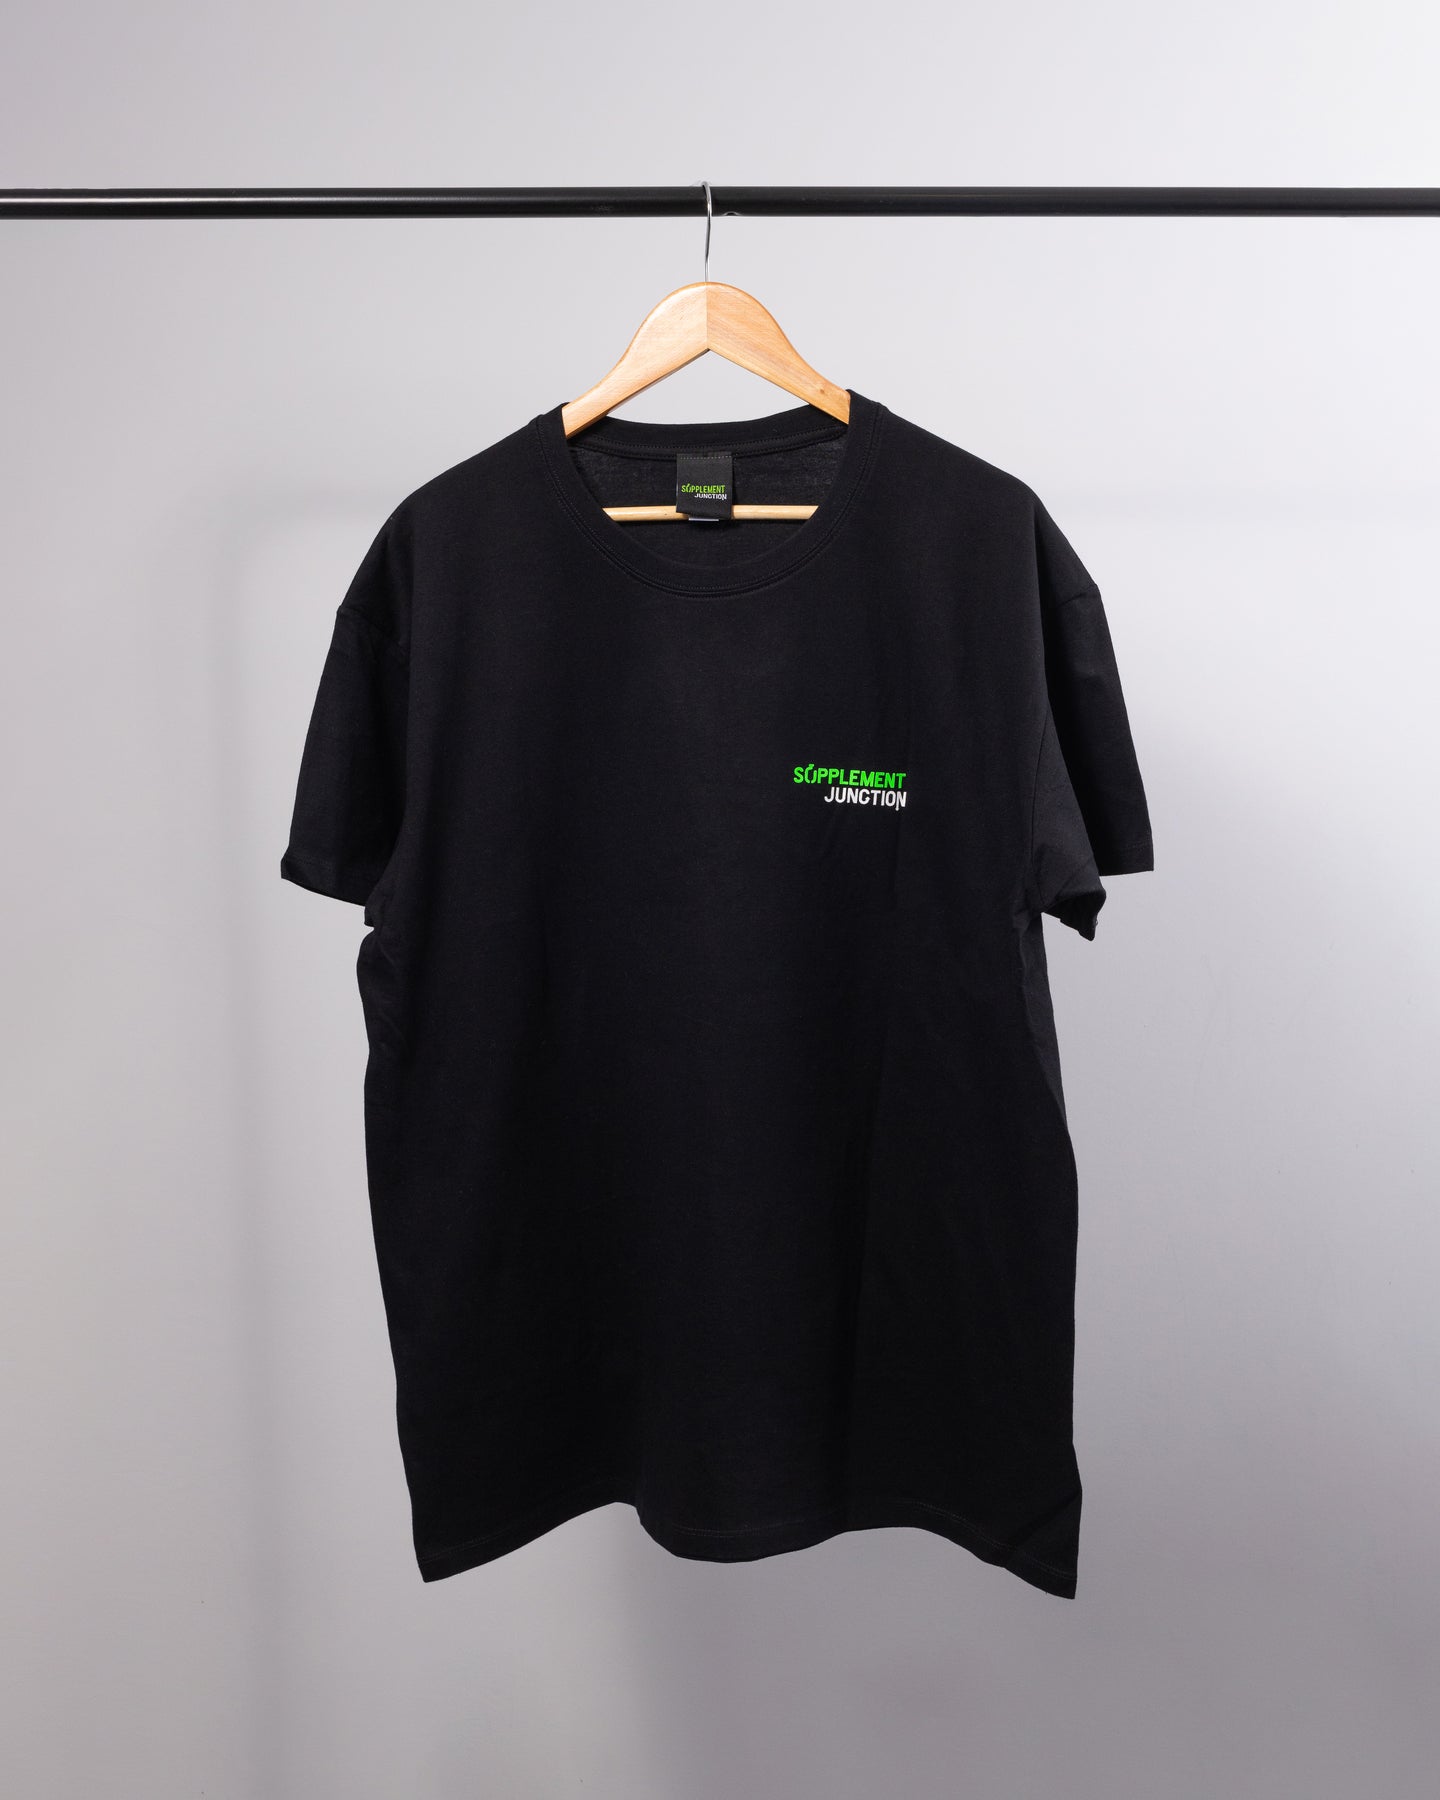 Supplement Junction T-Shirt - Black